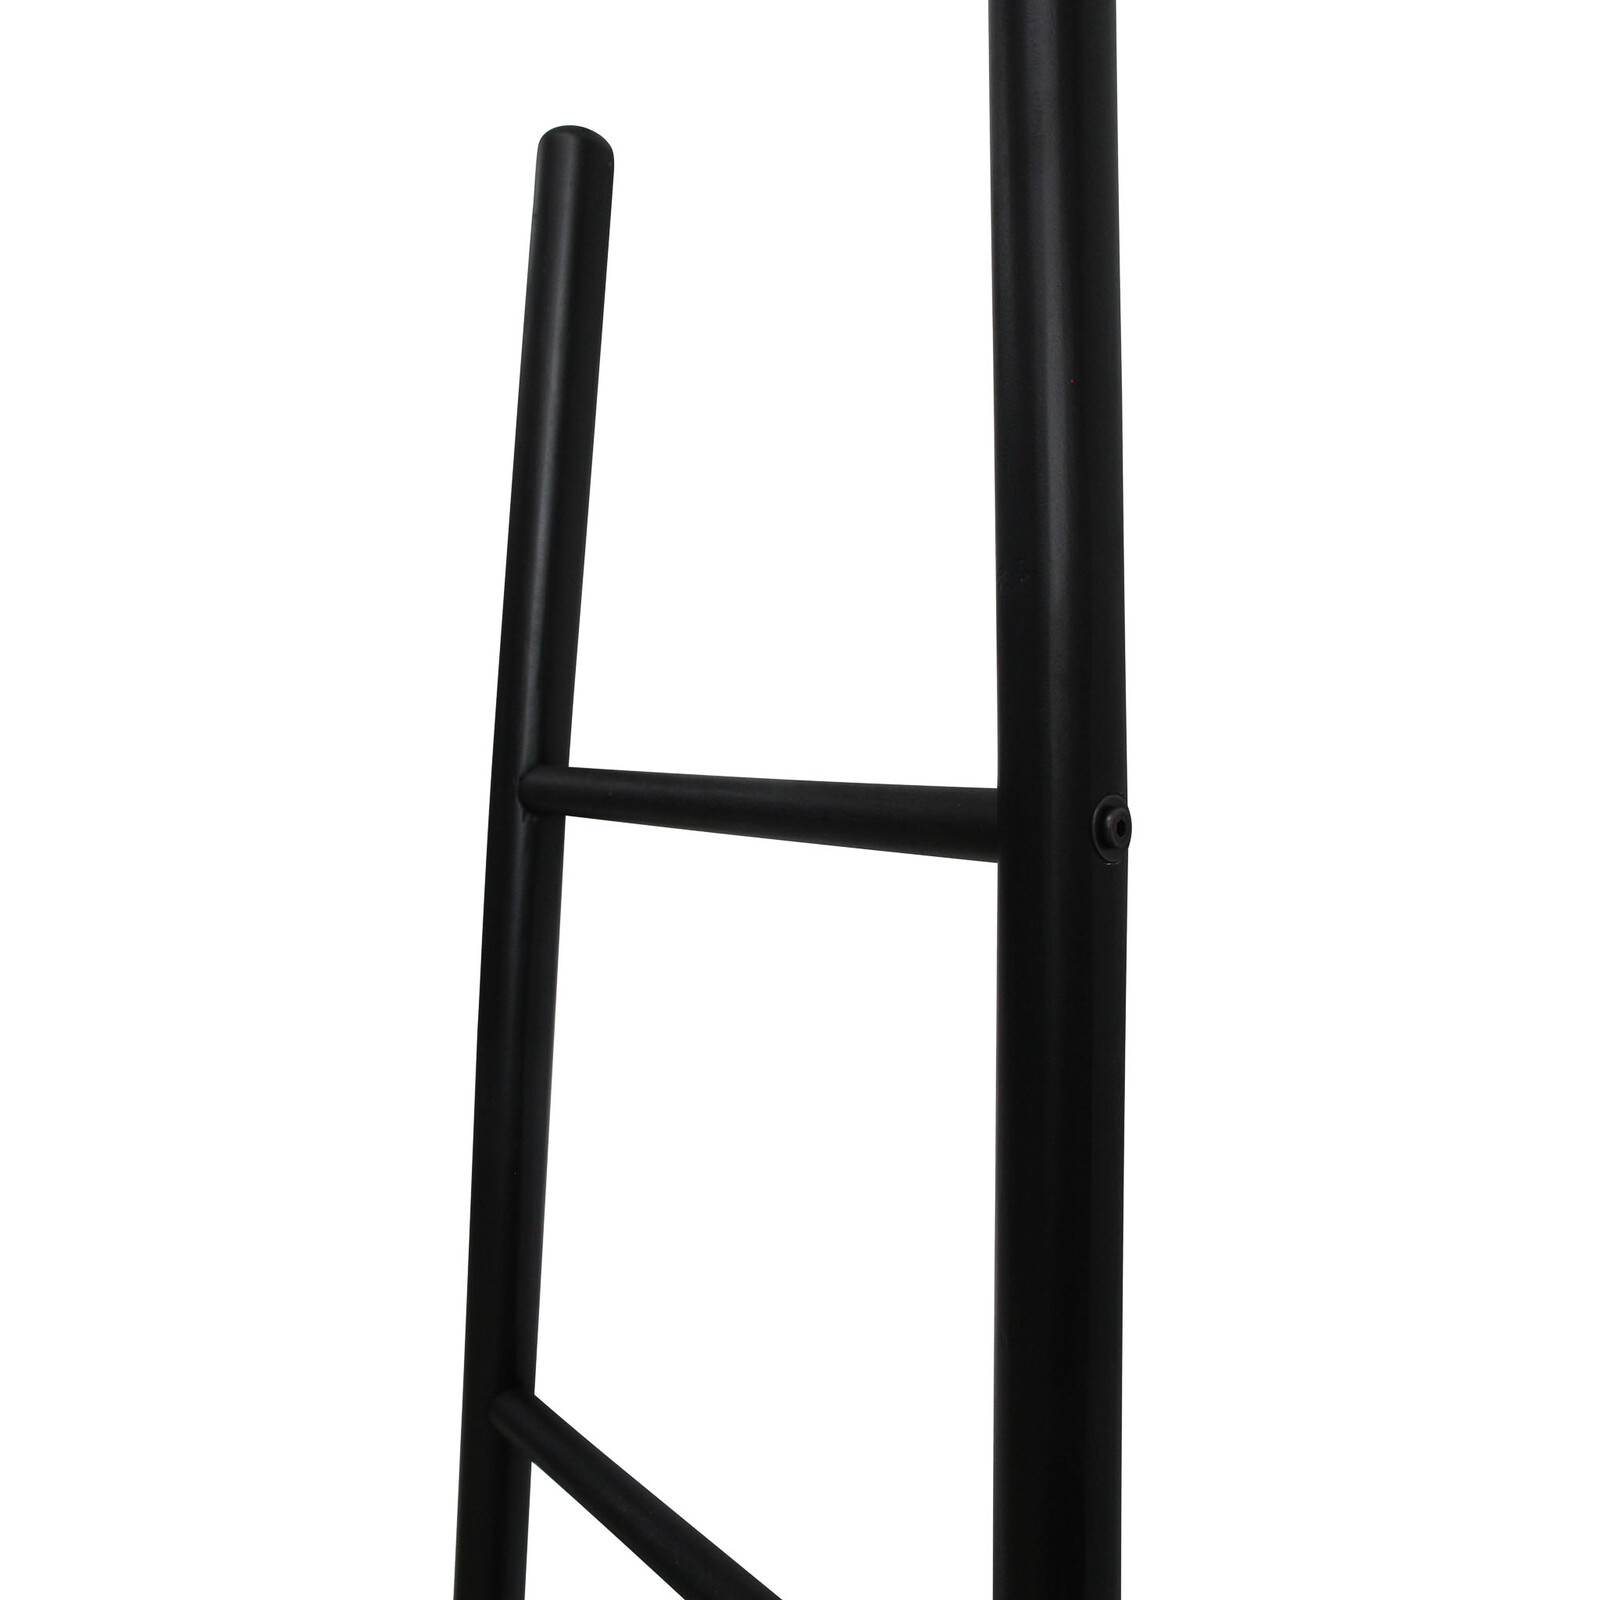 Ladder Angle Black